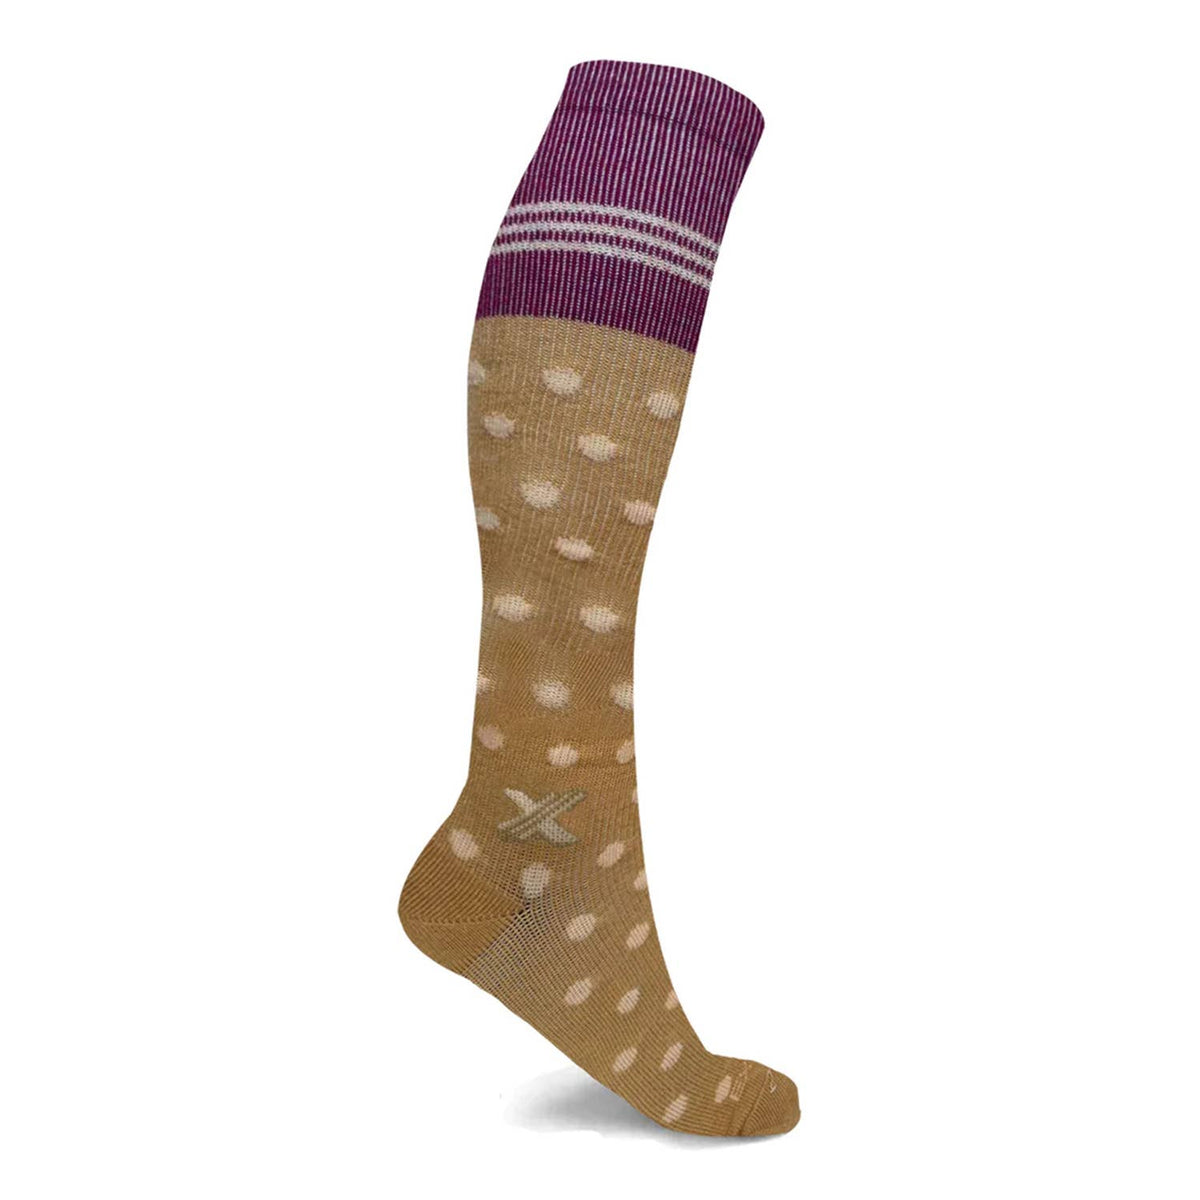 Happy Wool - MERINO WOOL COMPRESSION BOOT SOCKS - OATMEAL